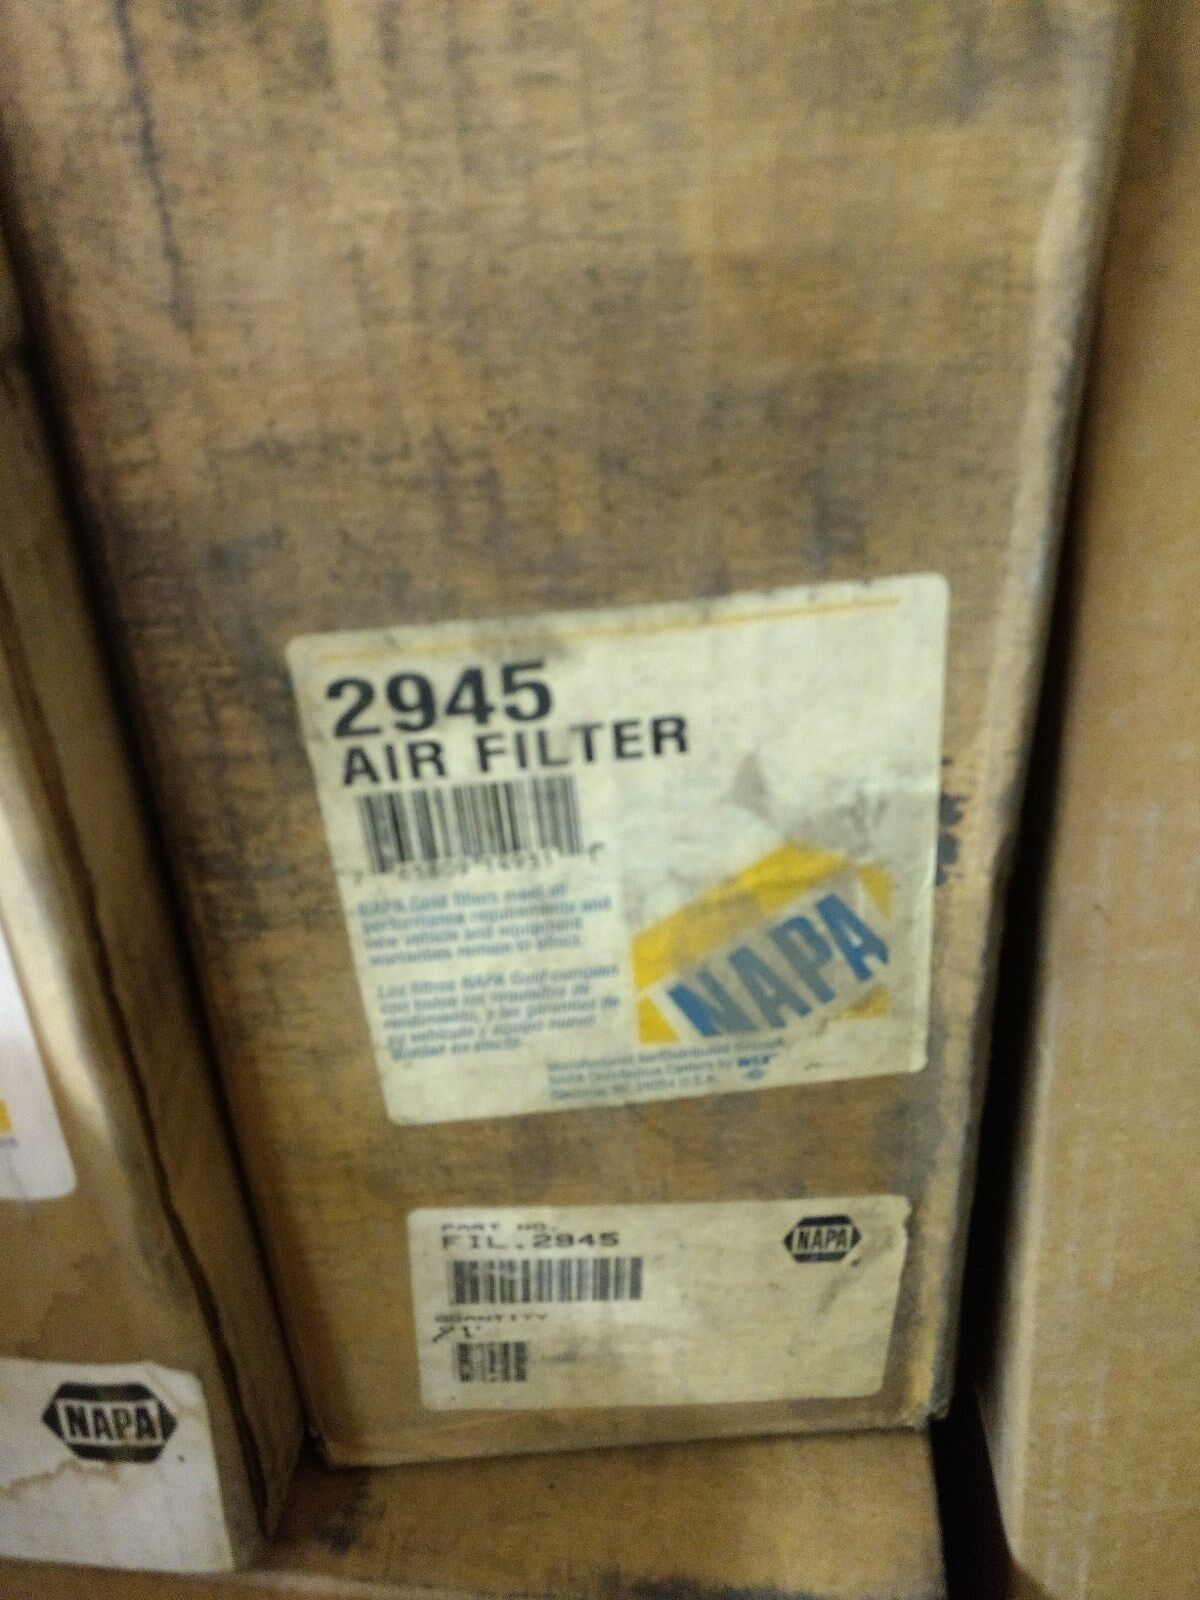 NAPA 2945 Air Filter (Wix 429450)